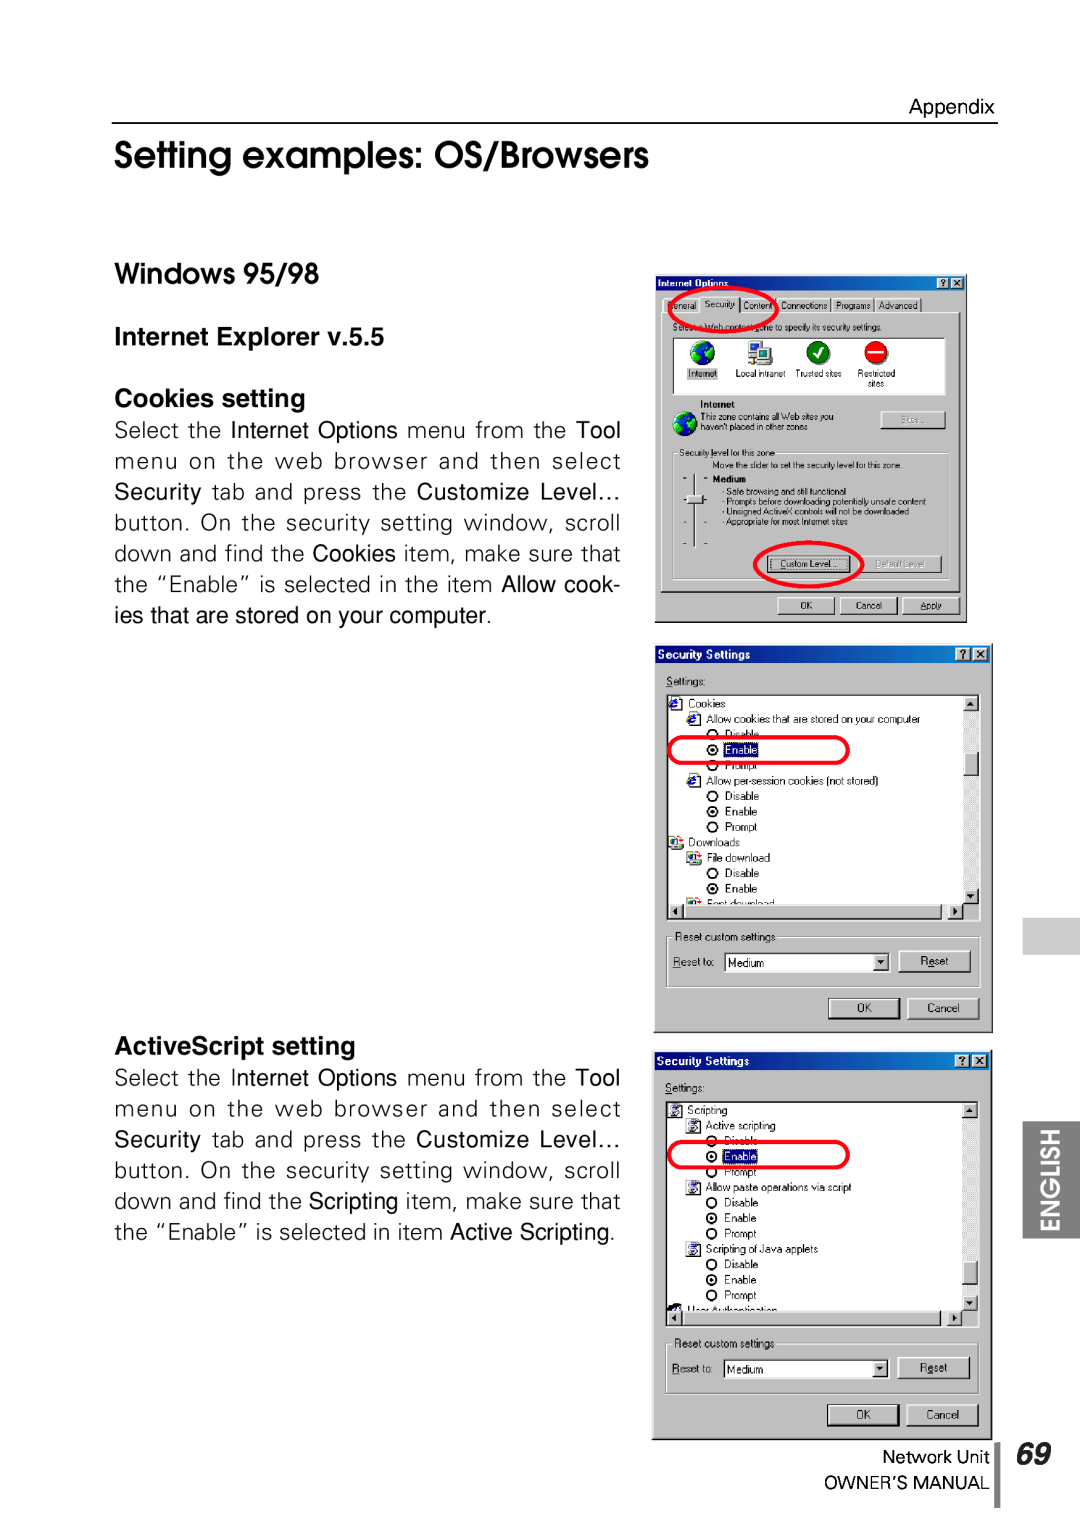 Sanyo POA-PN10 Setting examples OS/Browsers, Windows 95/98, Internet Explorer Cookies setting, ActiveScript setting 